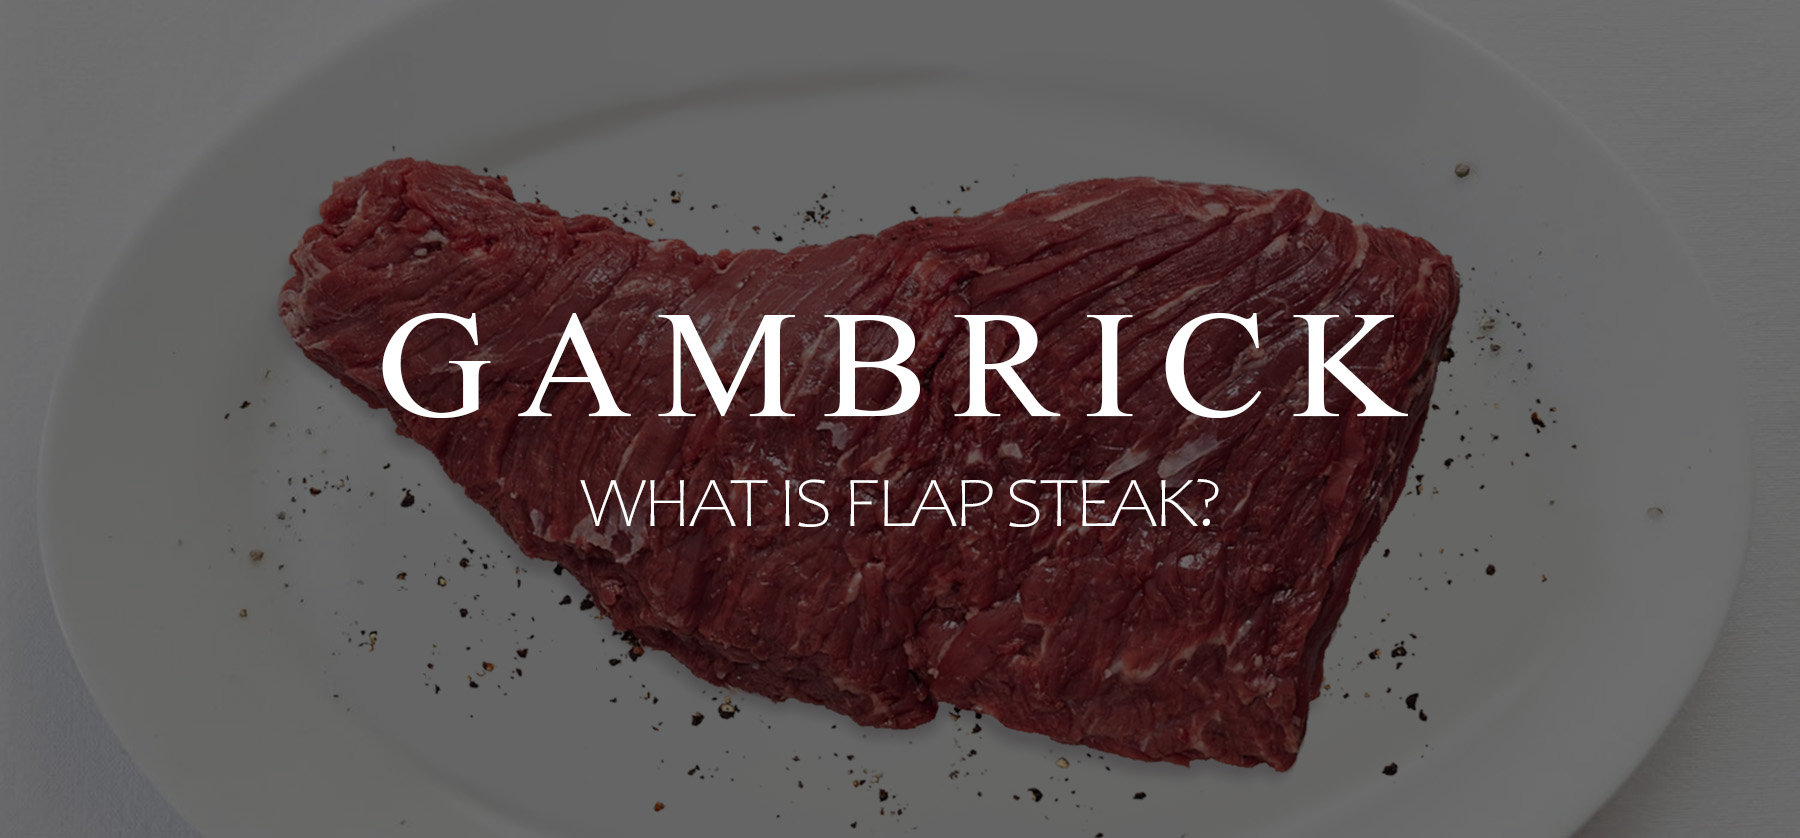 what is flap steak banner 1.0